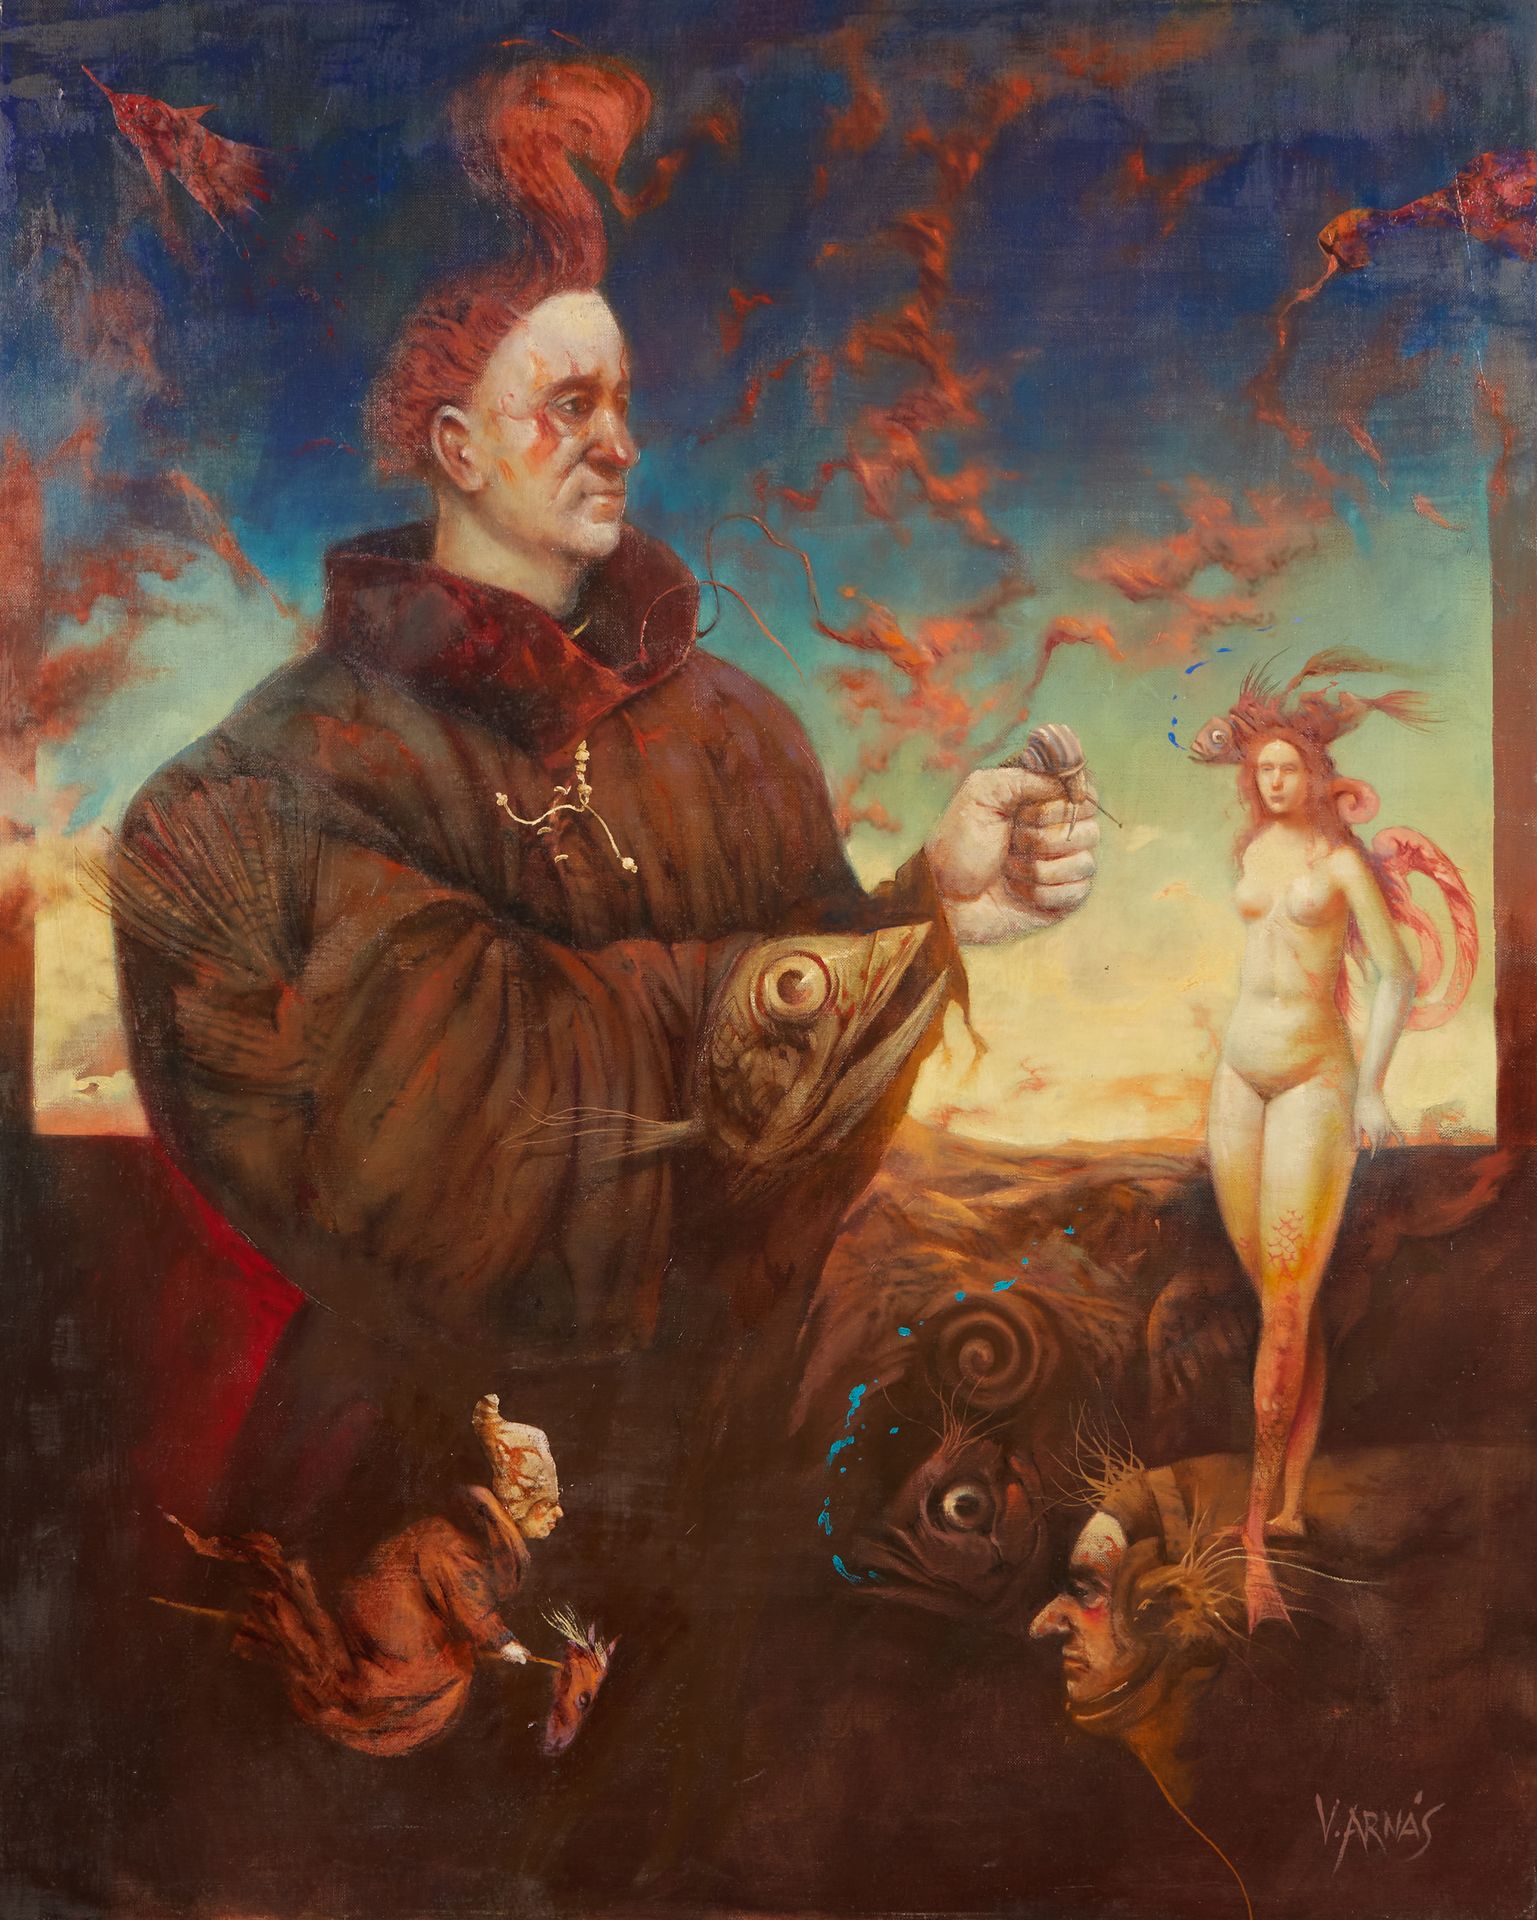 Null Vicente ARNAS LOZANO (生于1949年)
诱惑
布面油画，右下角有签名
101 x 82 cm